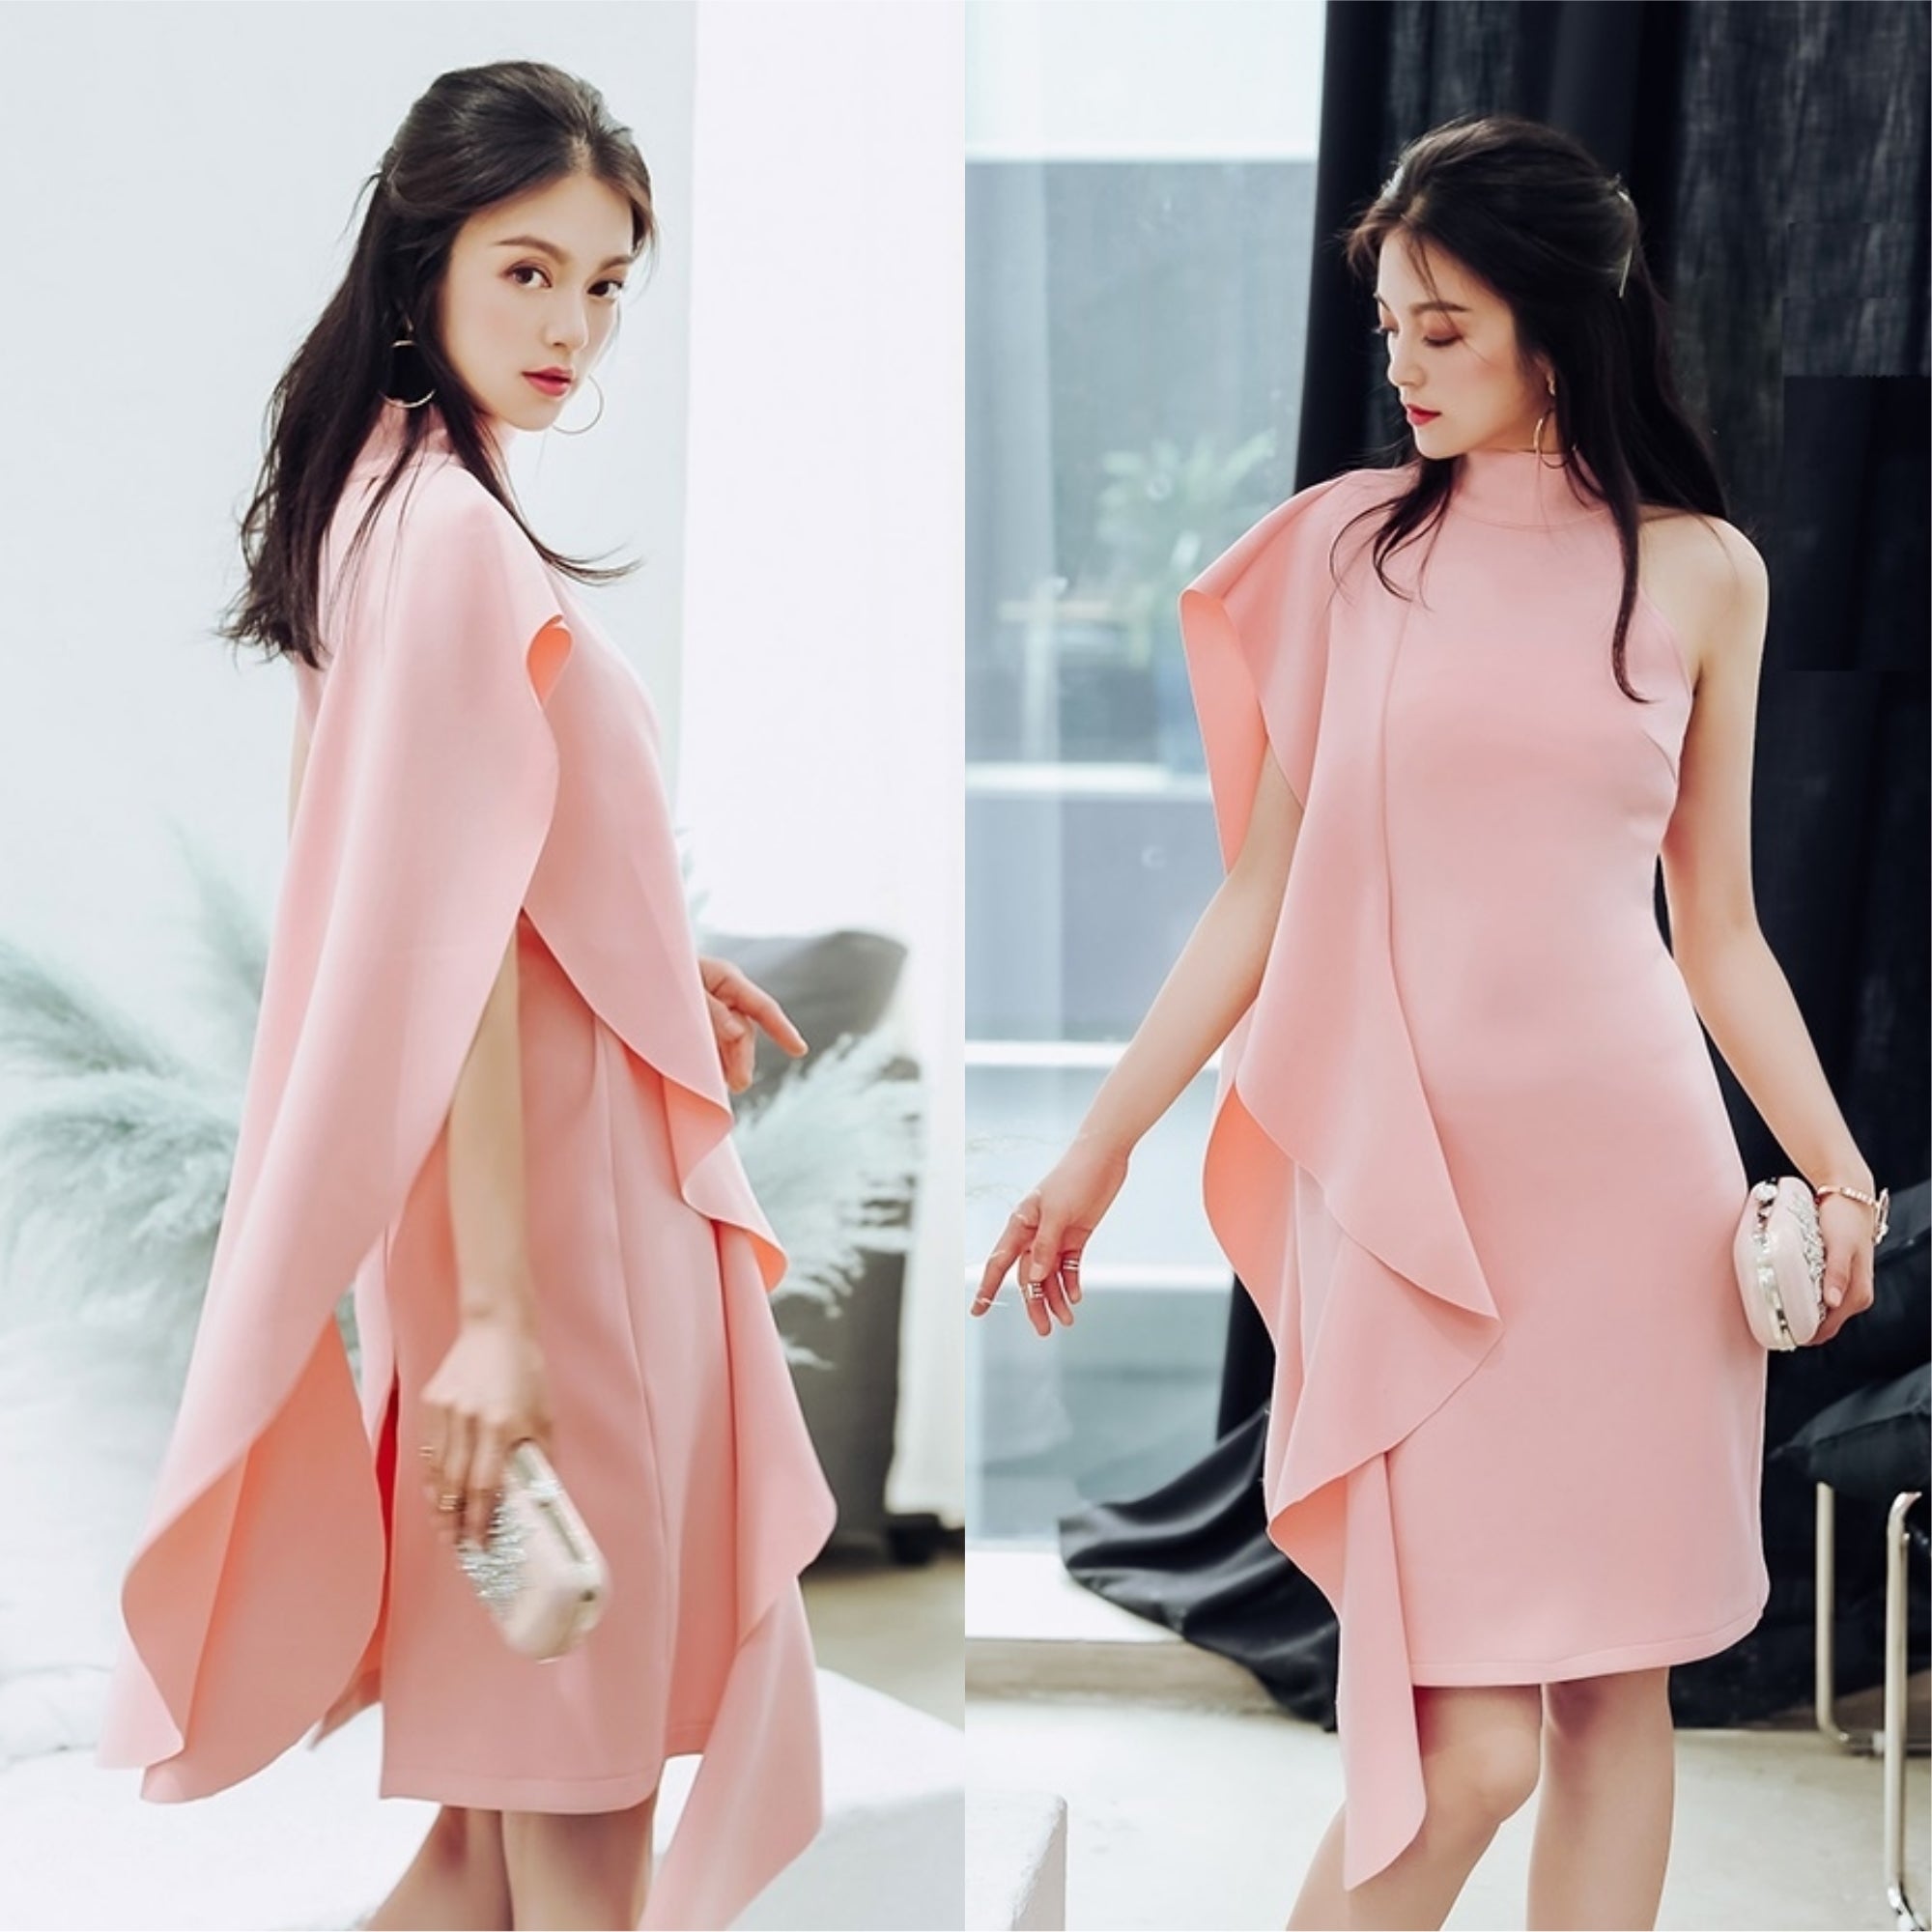 Florencio Sideway Ruffle Dress In Pink Limited Edition Laurel Blooms